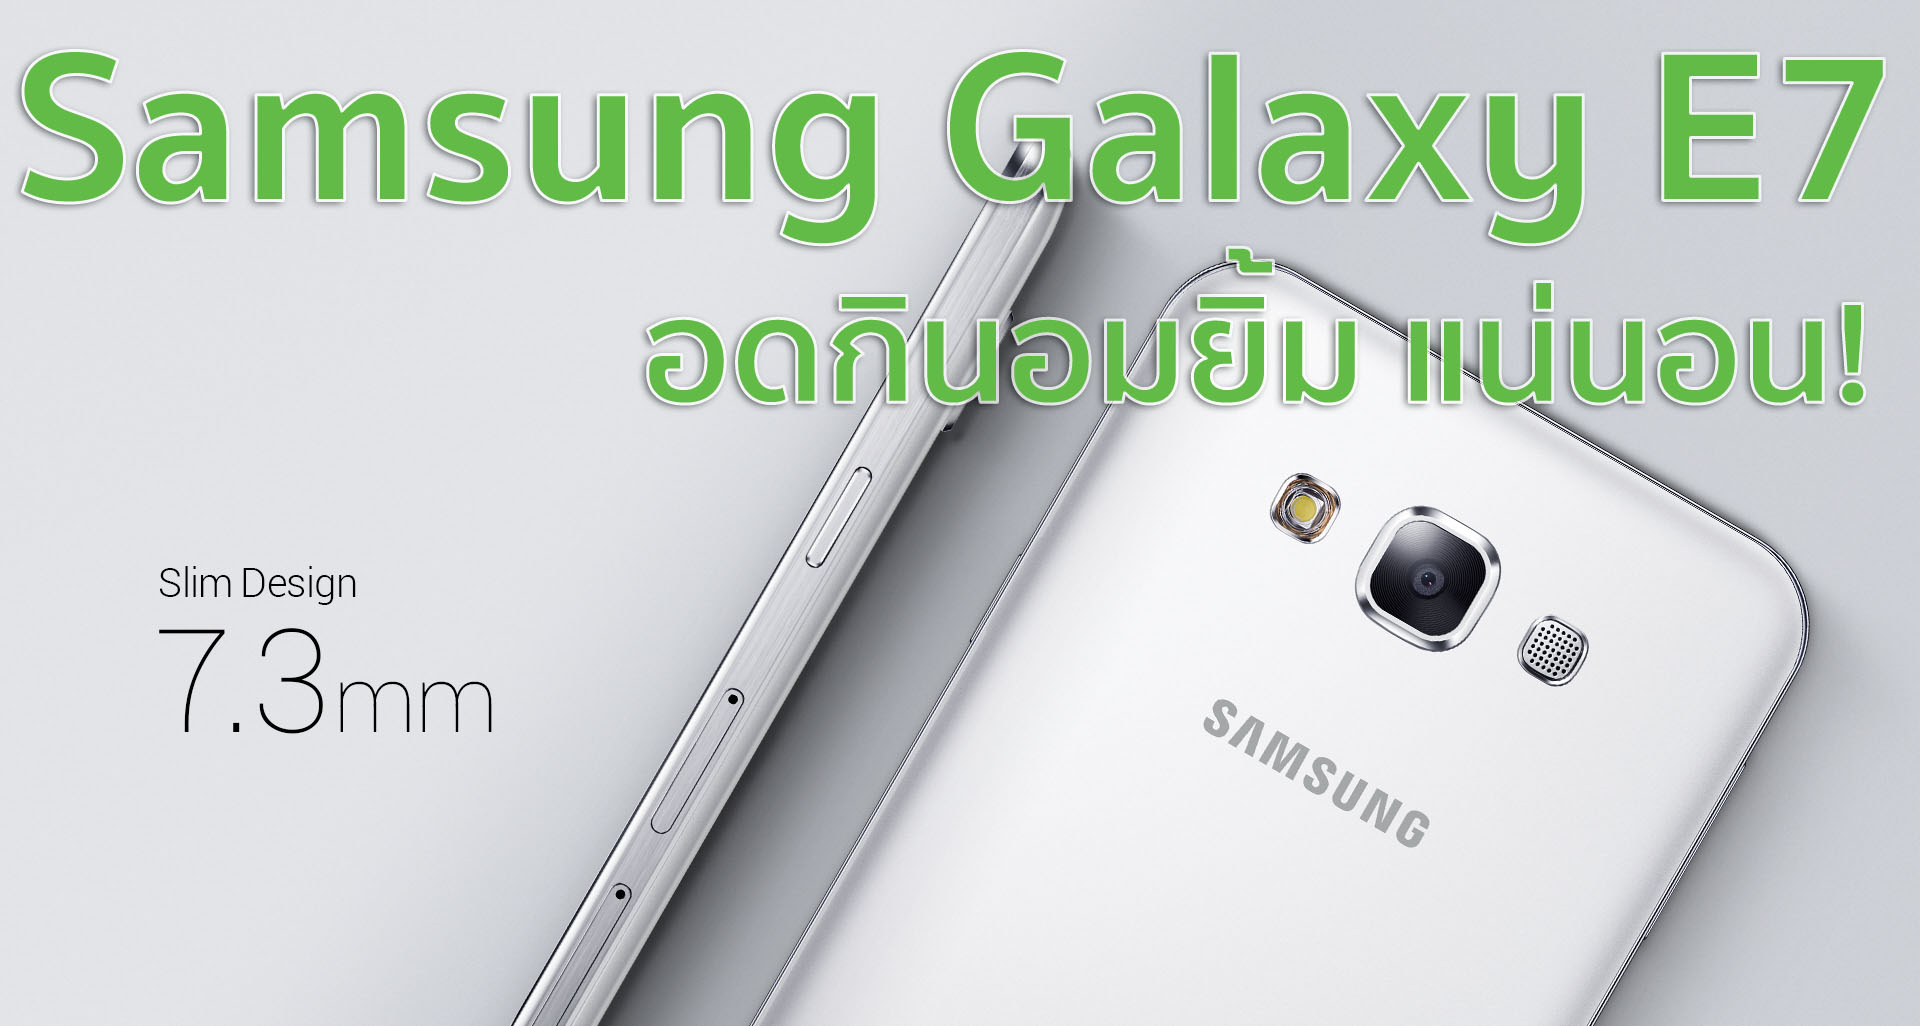 Samsung Galaxy E7 จะไม่ได้อัพเดต Android Lollipop แน่นอน!